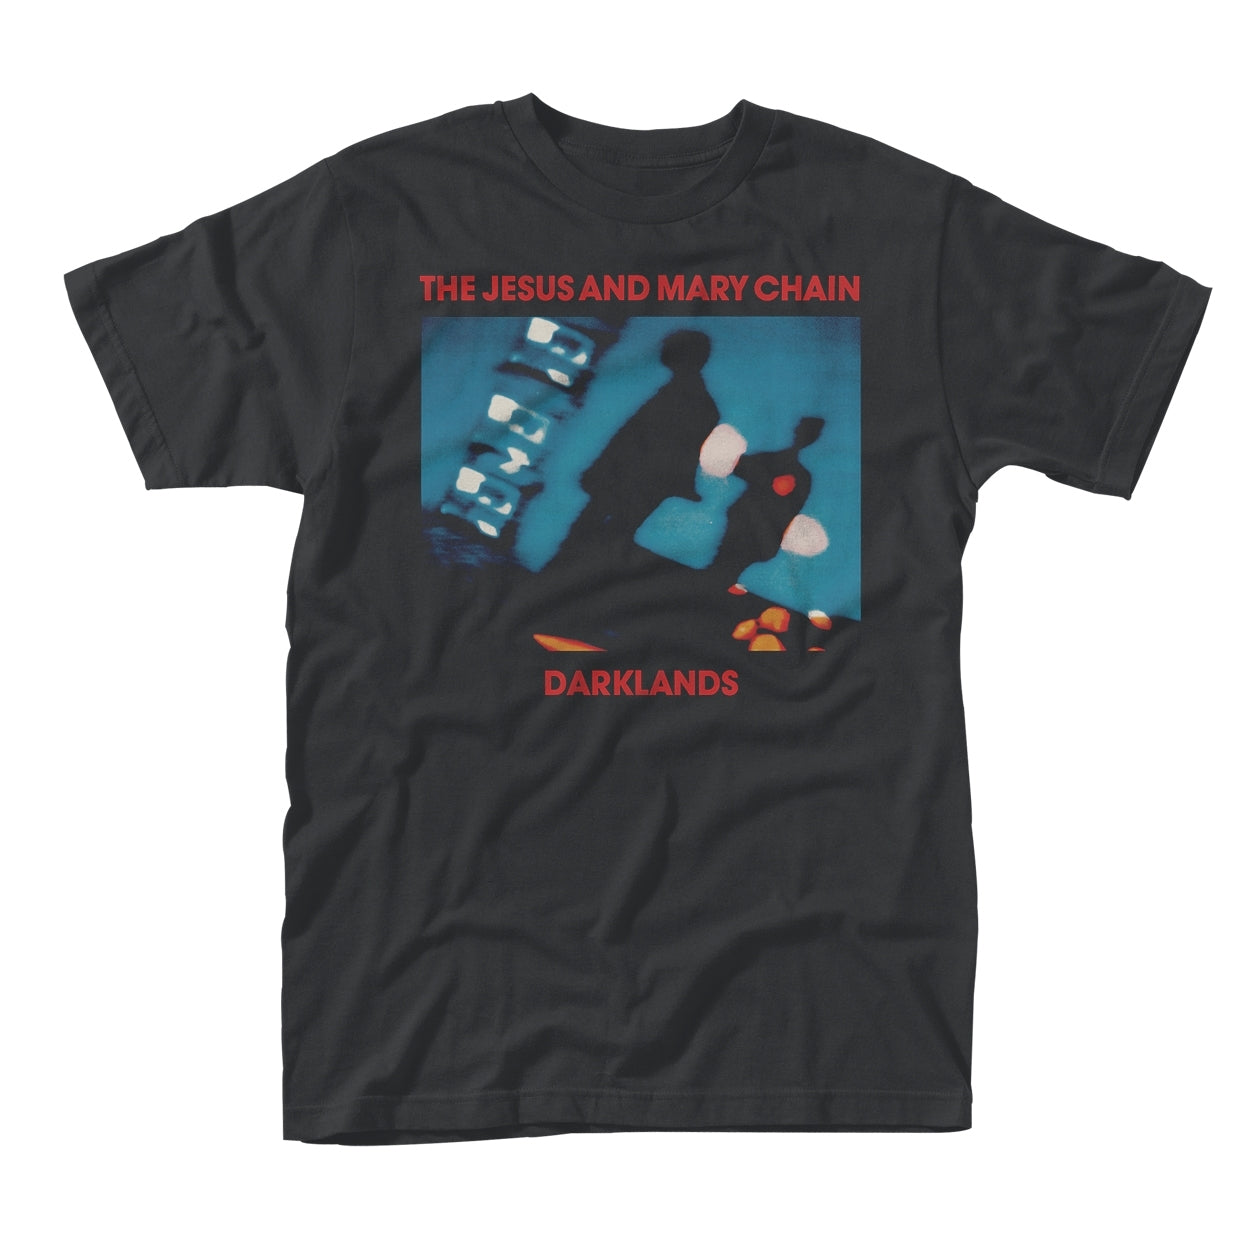 The Jesus And Mary Chain "Darklands" T shirt